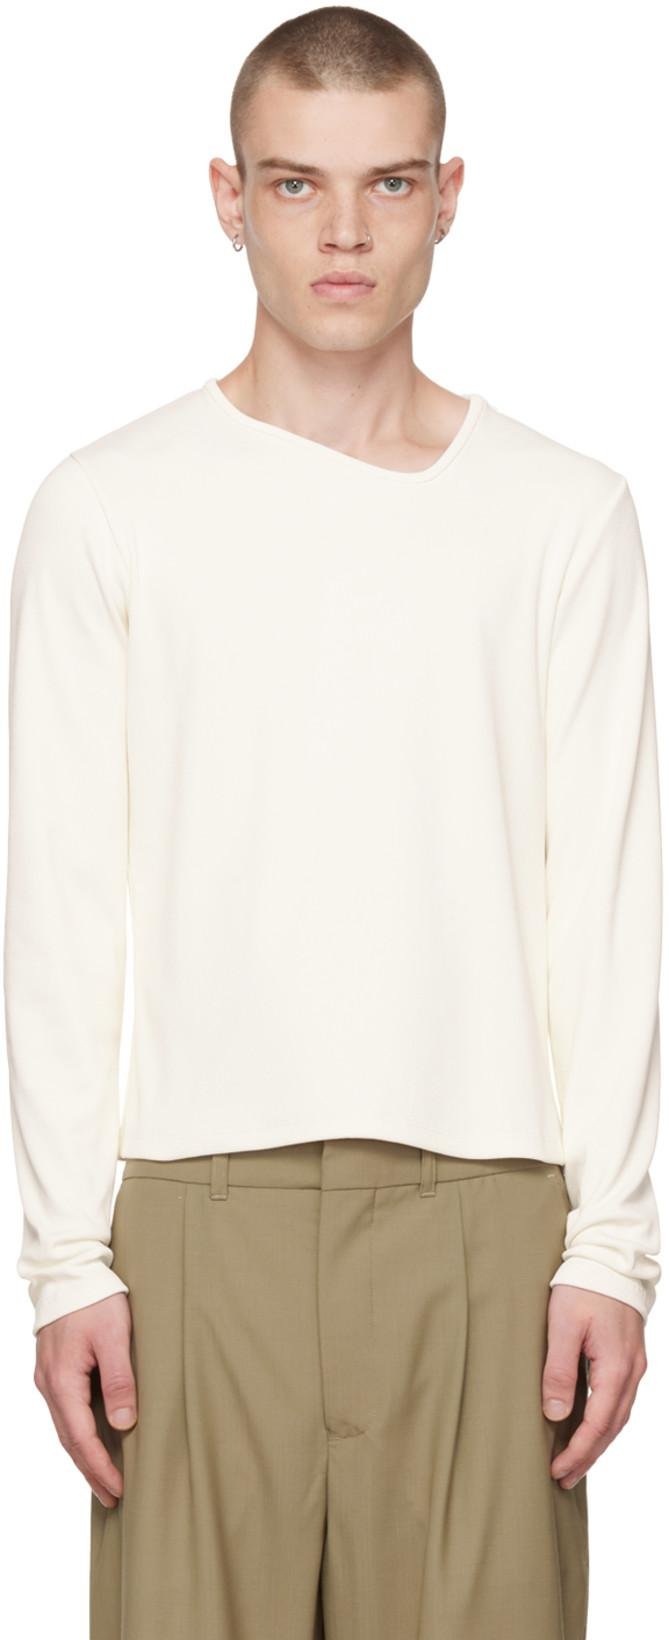 White Asymmetric Long Sleeve T-Shirt by BIANCA SAUNDERS